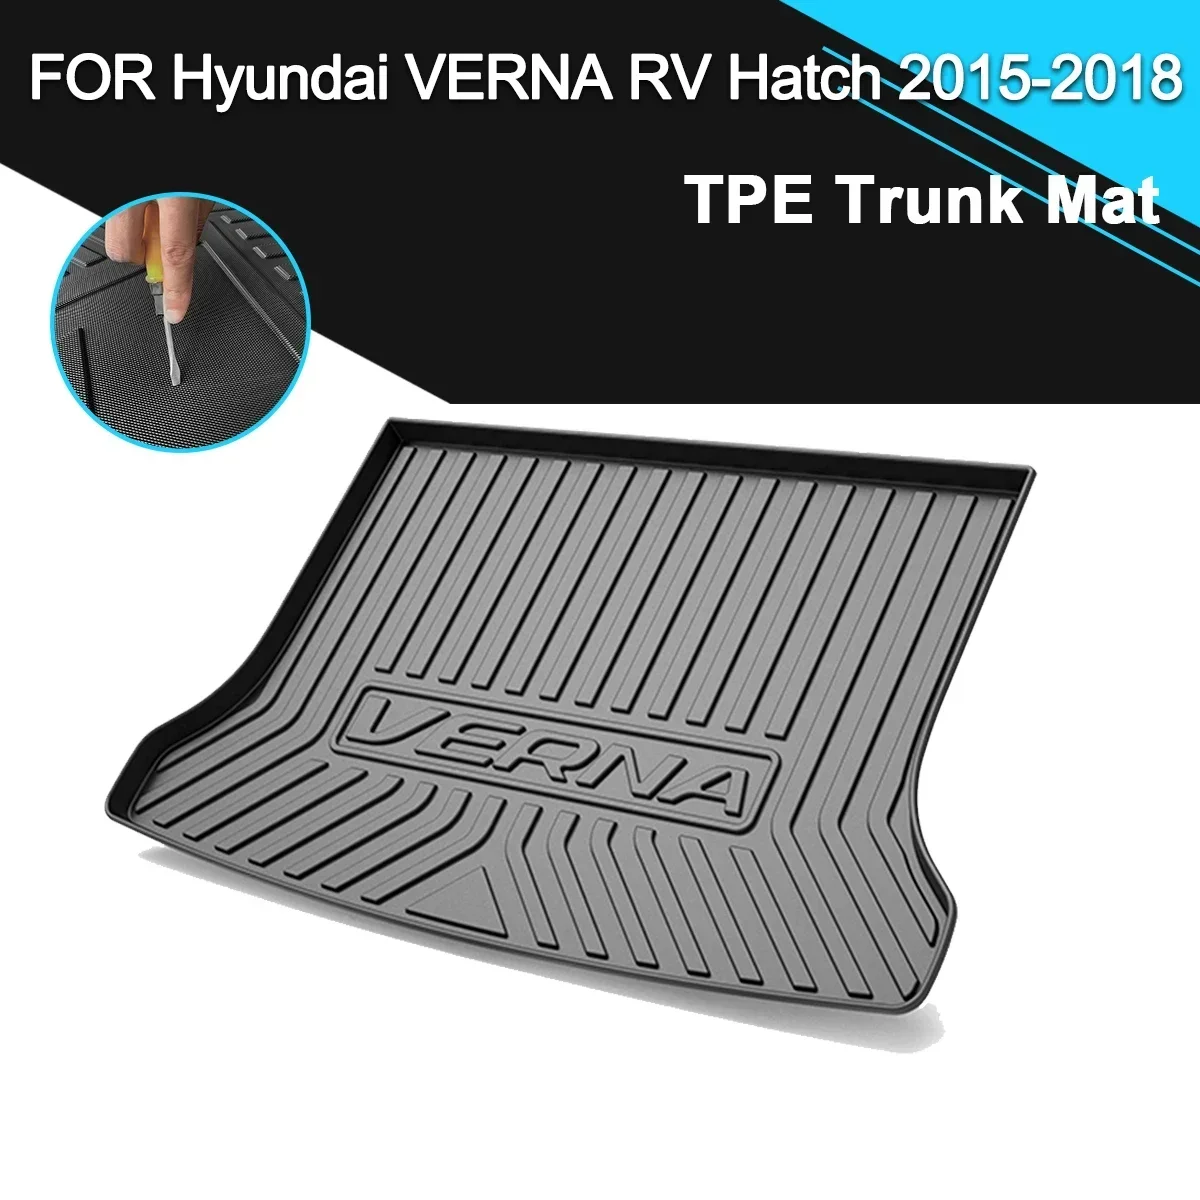 

Car Rear Trunk Cover Mat Non-Slip Waterproof Rubber TPE Cargo Liner Accessories For Hyundai Verna RV Hatchback 2015-2018